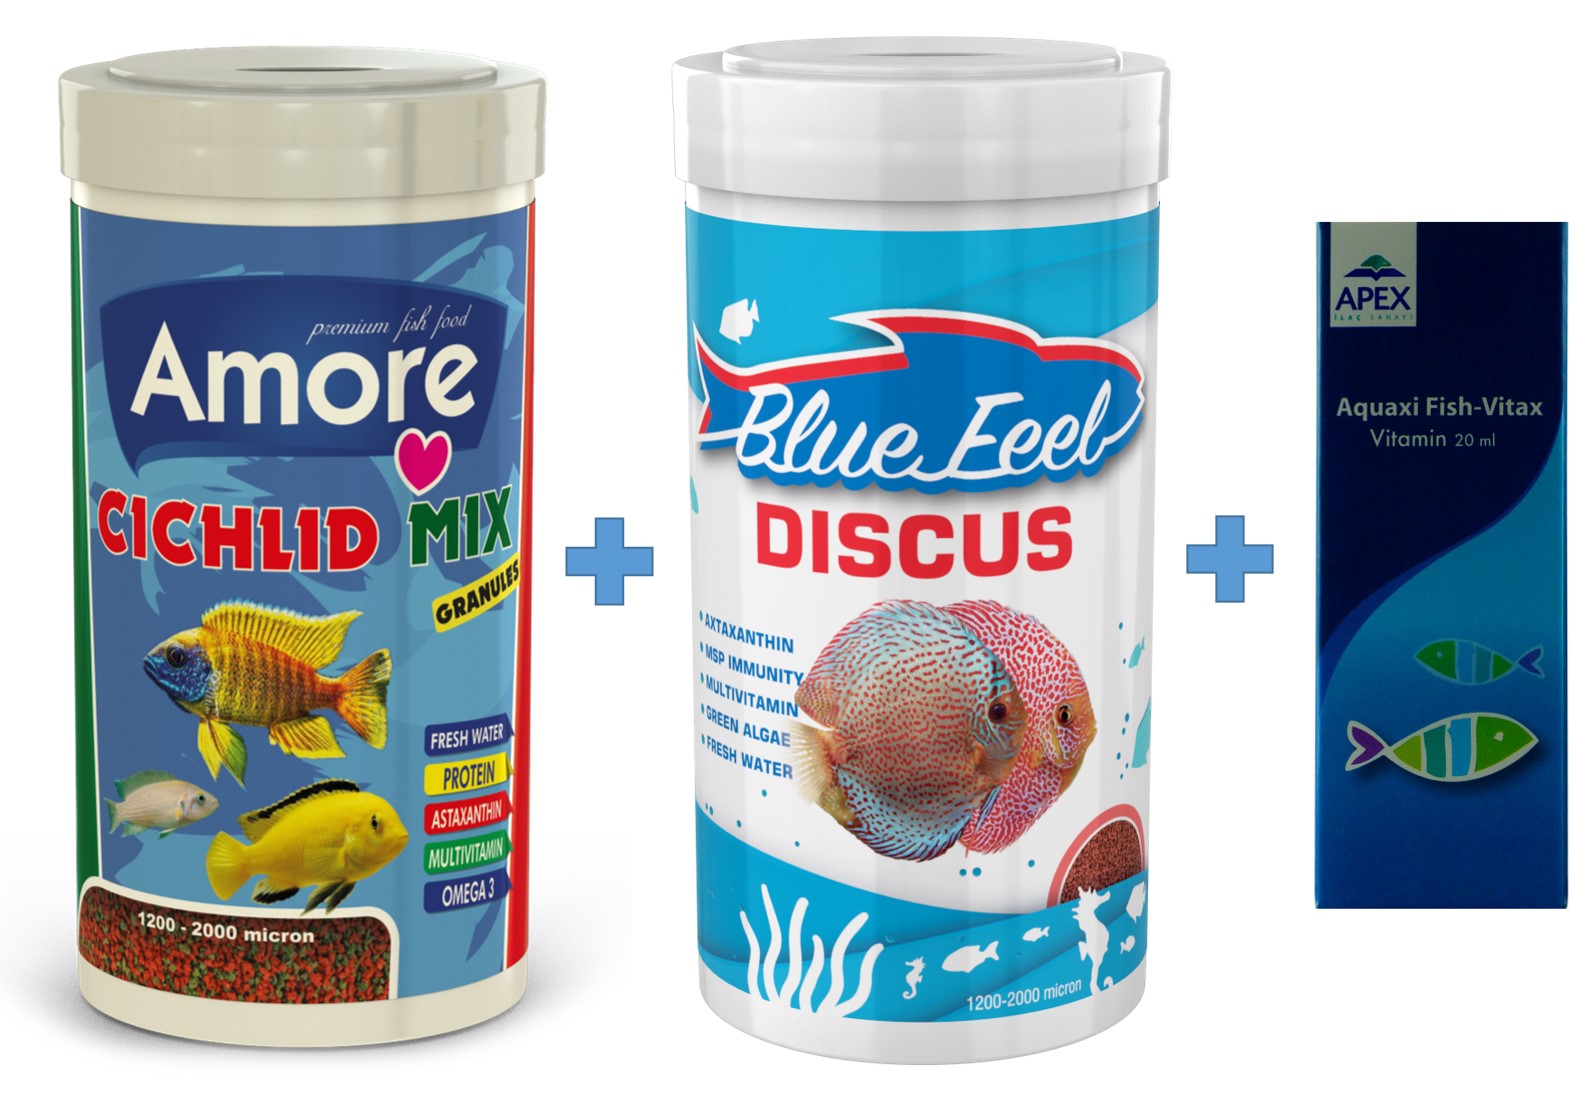 Cichlid Mix Granules 250ml ve BlueFeel Discus 250ml Kutu Balık Yemi ve Vitamini fotograf